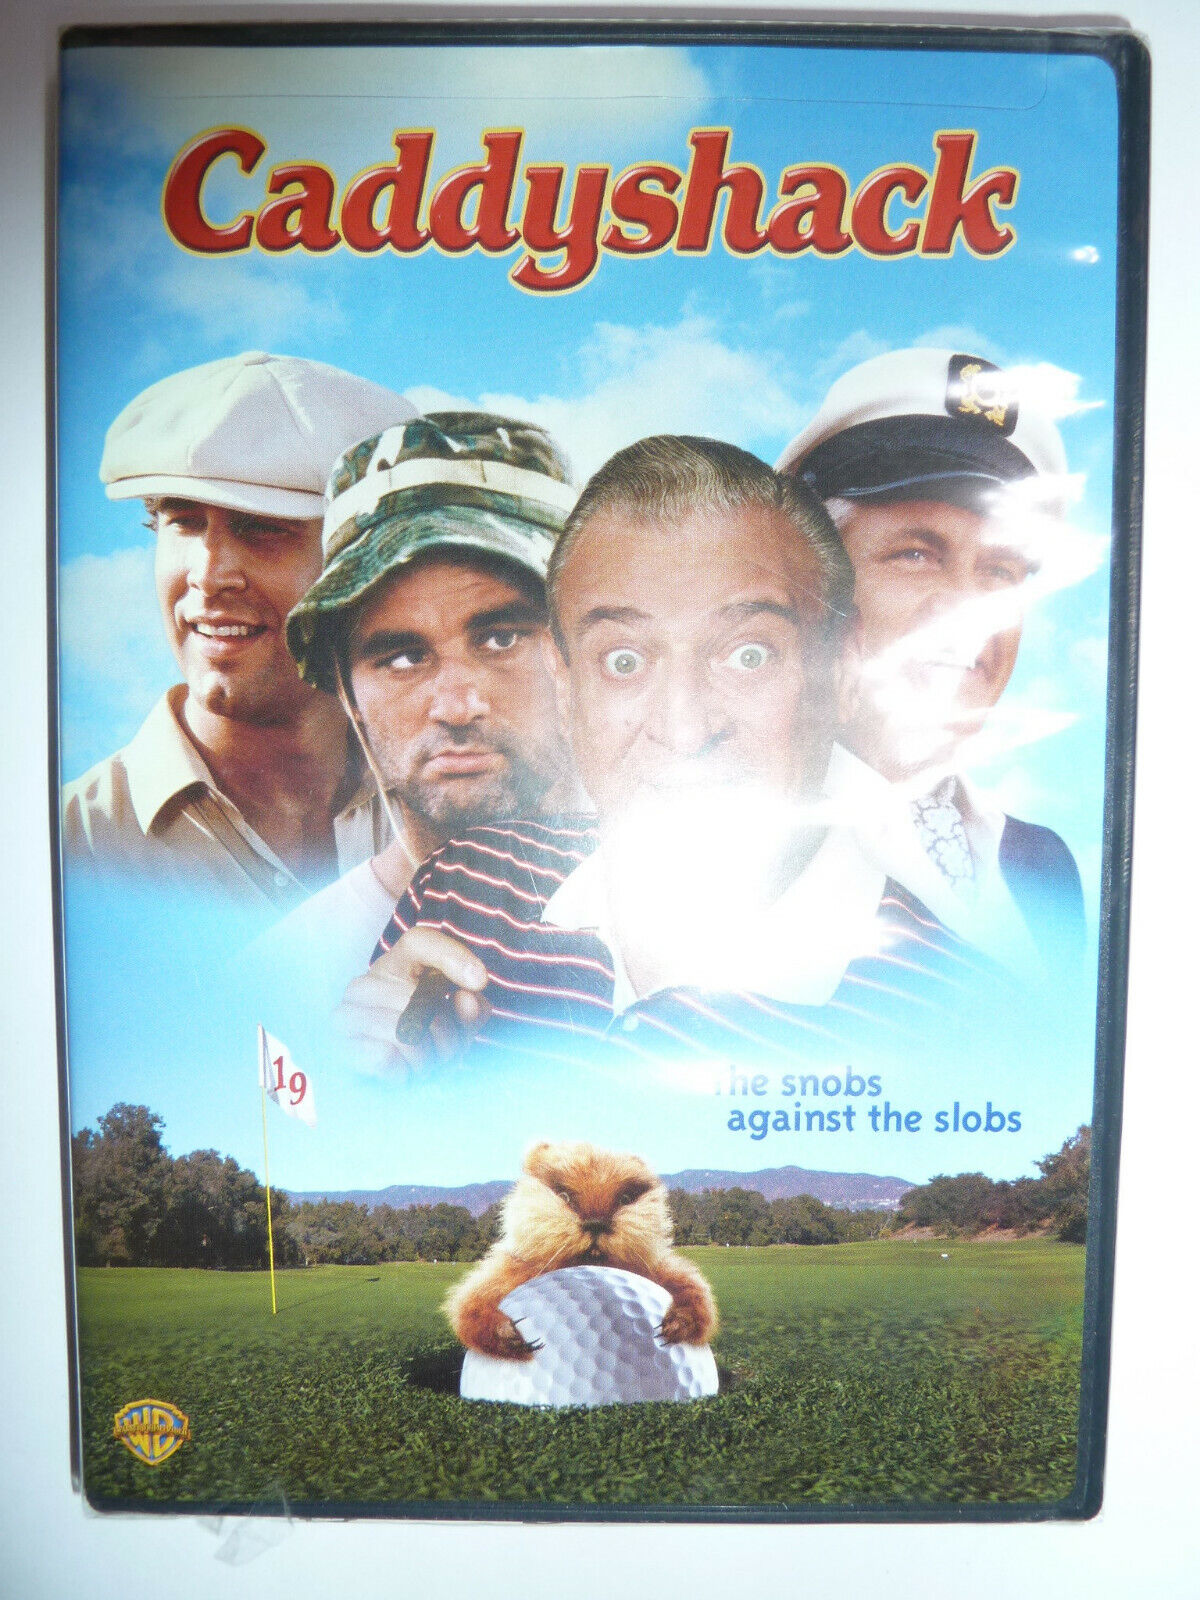 Caddyshack (DVD, 1997) for sale online eBay